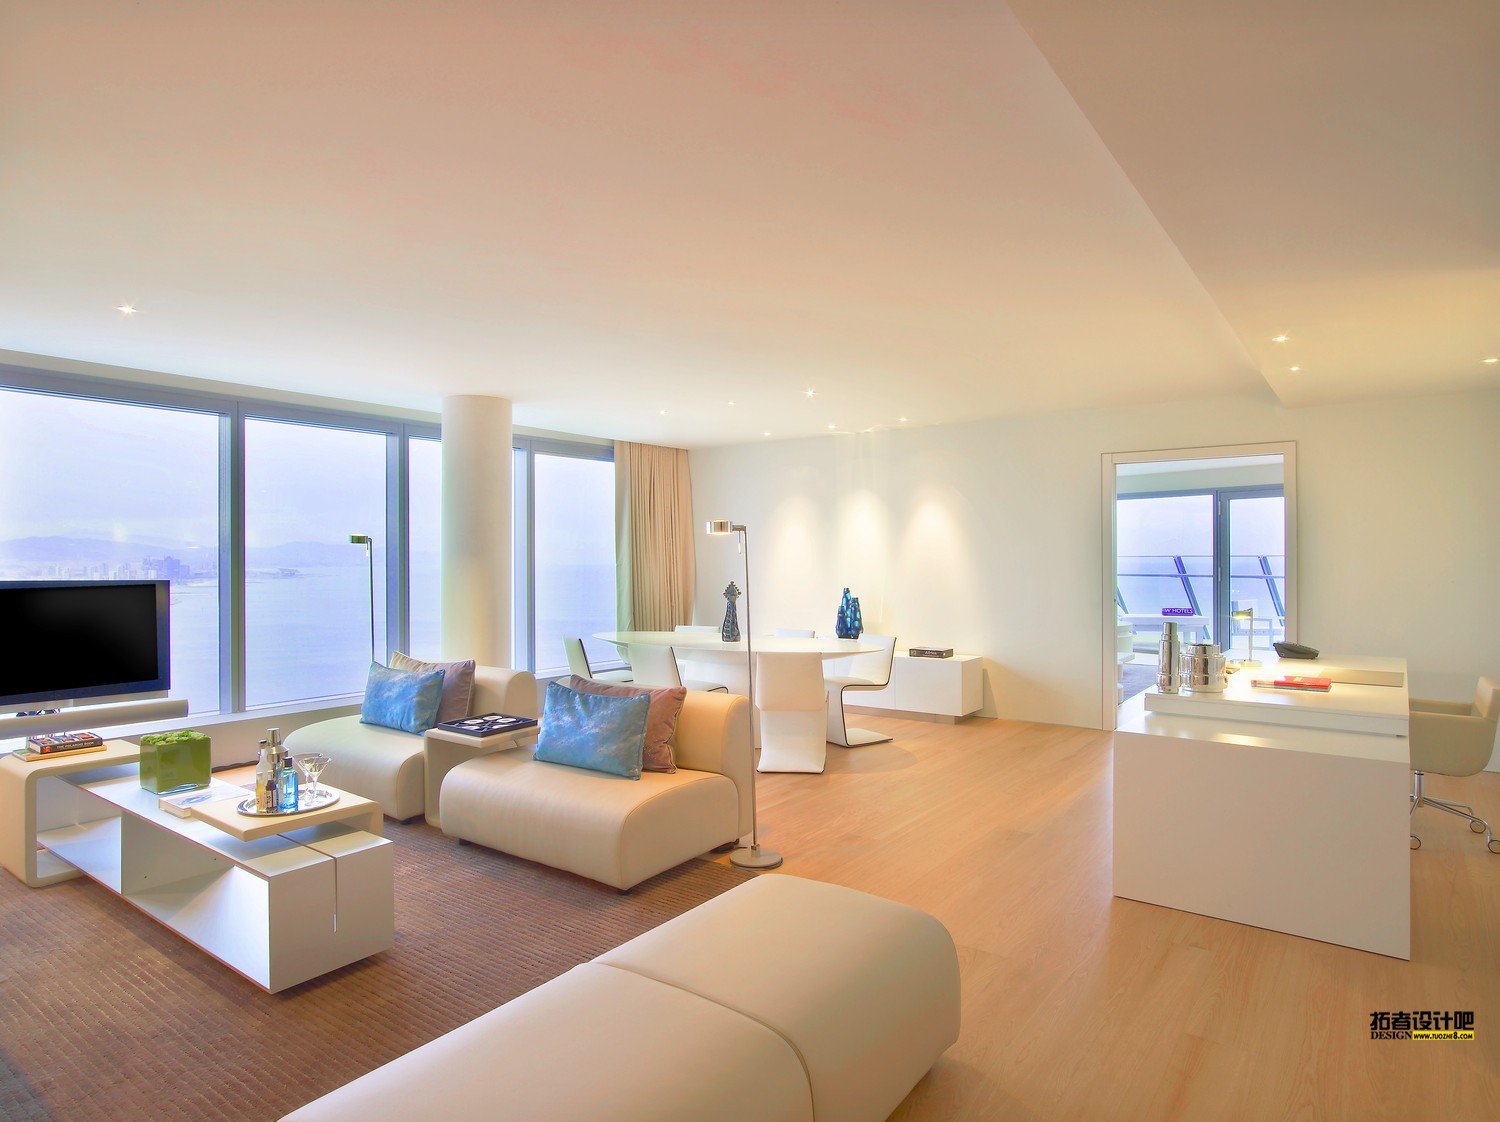 13)W BarcelonaWOW Suite Living Room Ĕz.jpg